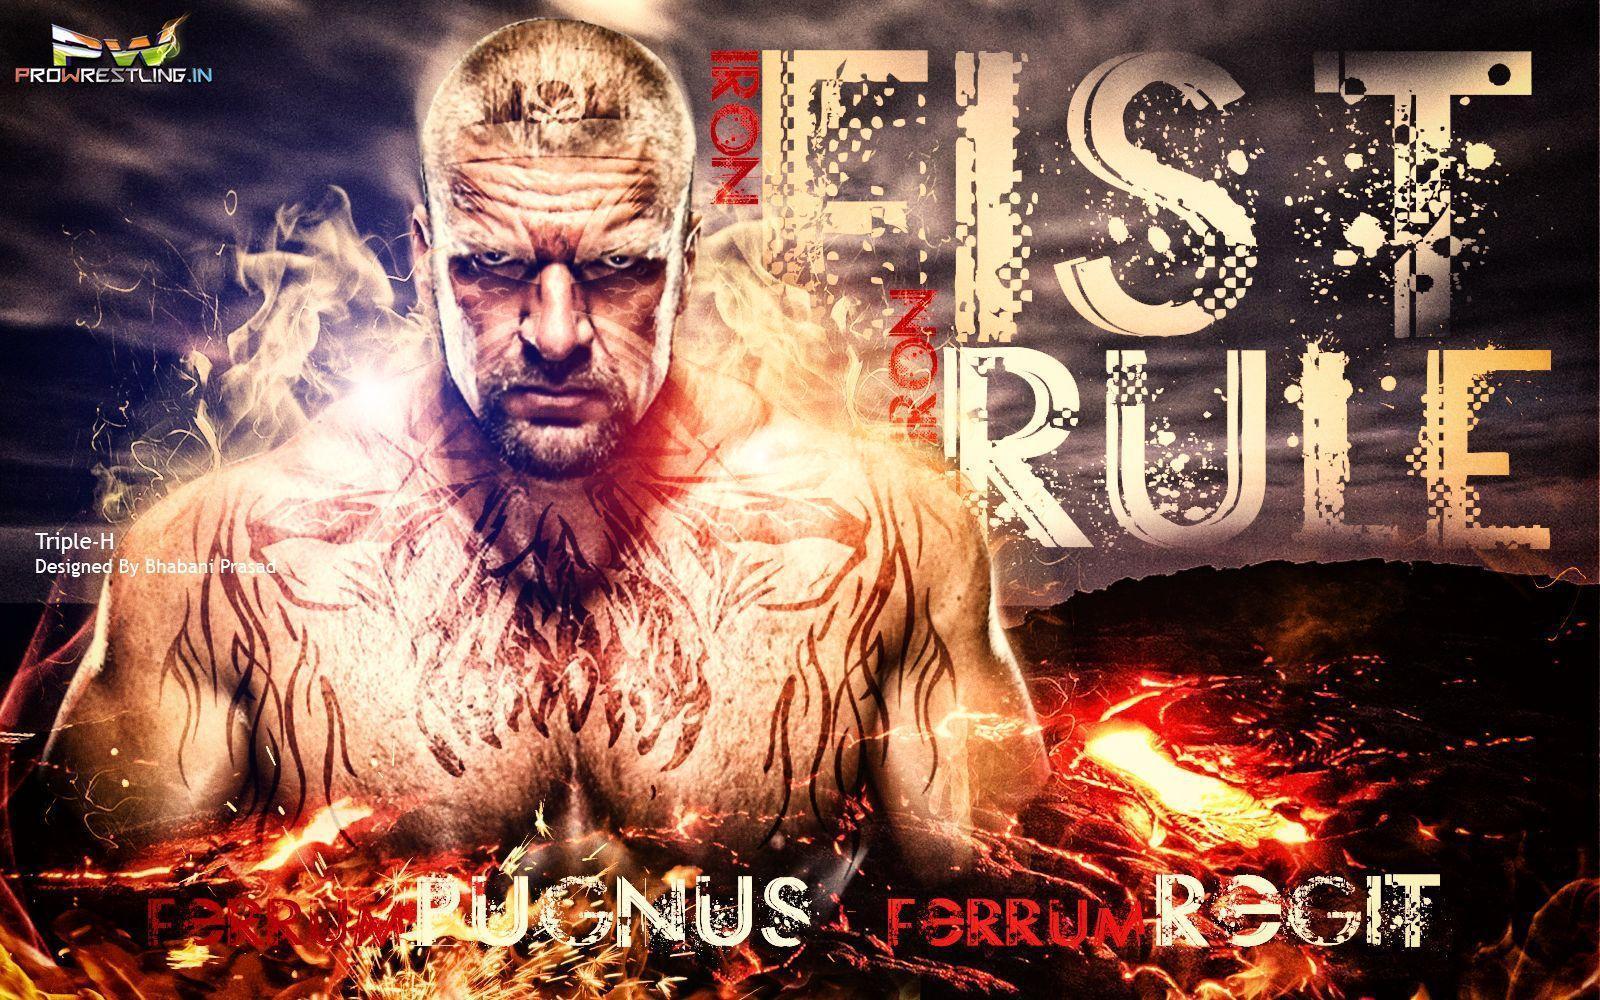 Wallpaper: Download Triple H New World Champ "Iron Fist Iron Rule